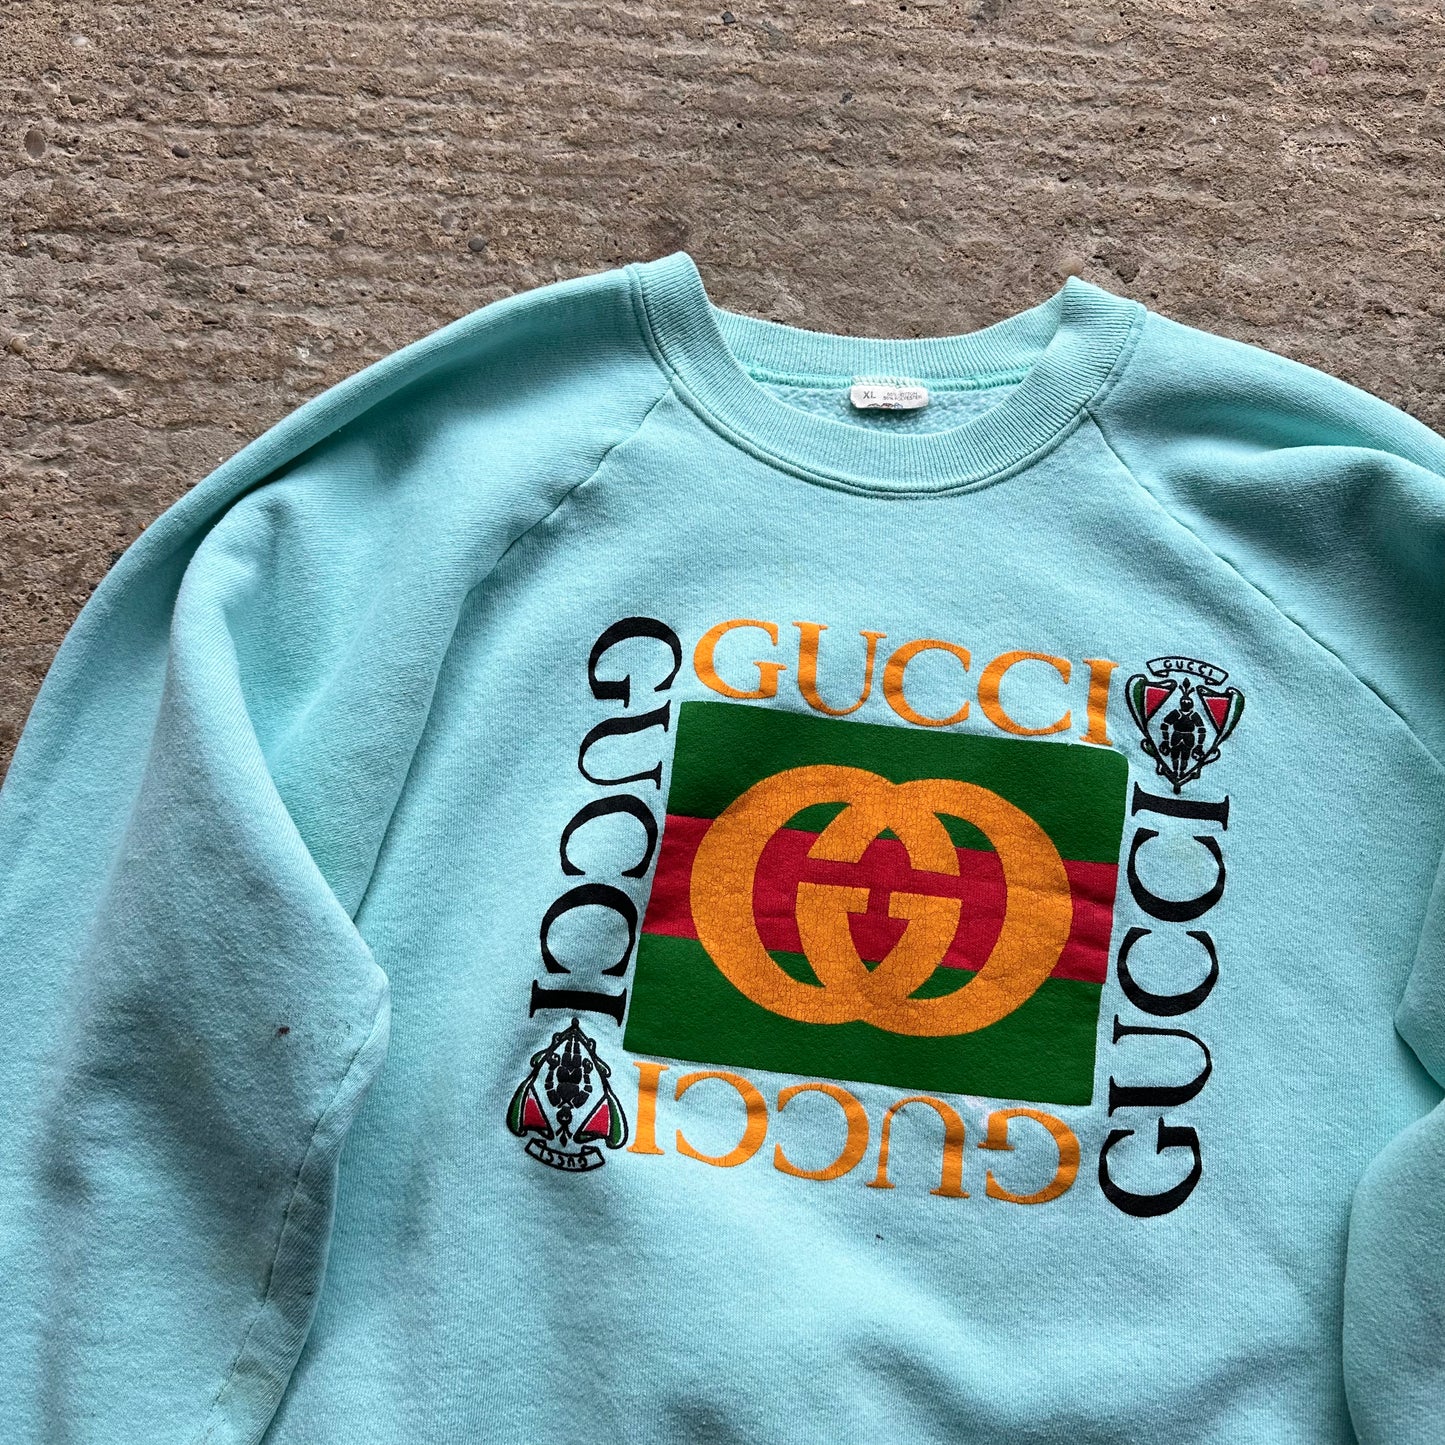 Gucci - 'Bootleg' - 90's - L